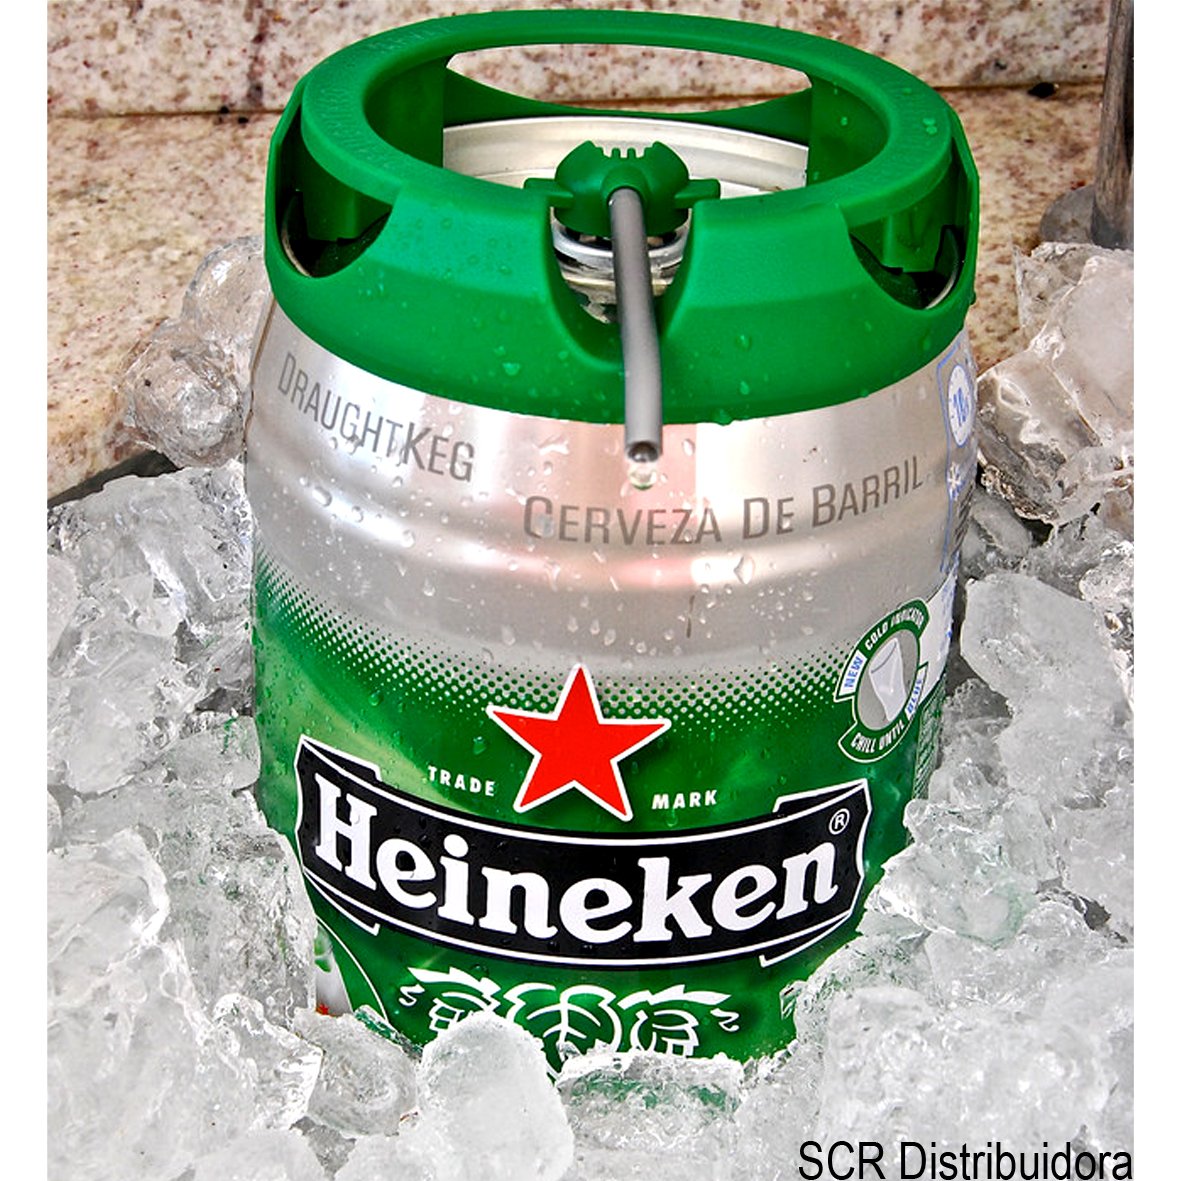 recinto Embutido Extraordinario SCR Distribuidora on Twitter: "Heineken Barril 5000 ml $715,00 #Cerveza  #Heinekenbarril #llevateeltuyo #BienHelada #SCRDistribuidora  #VillaBalllester https://t.co/rP8JAet2w9" / Twitter